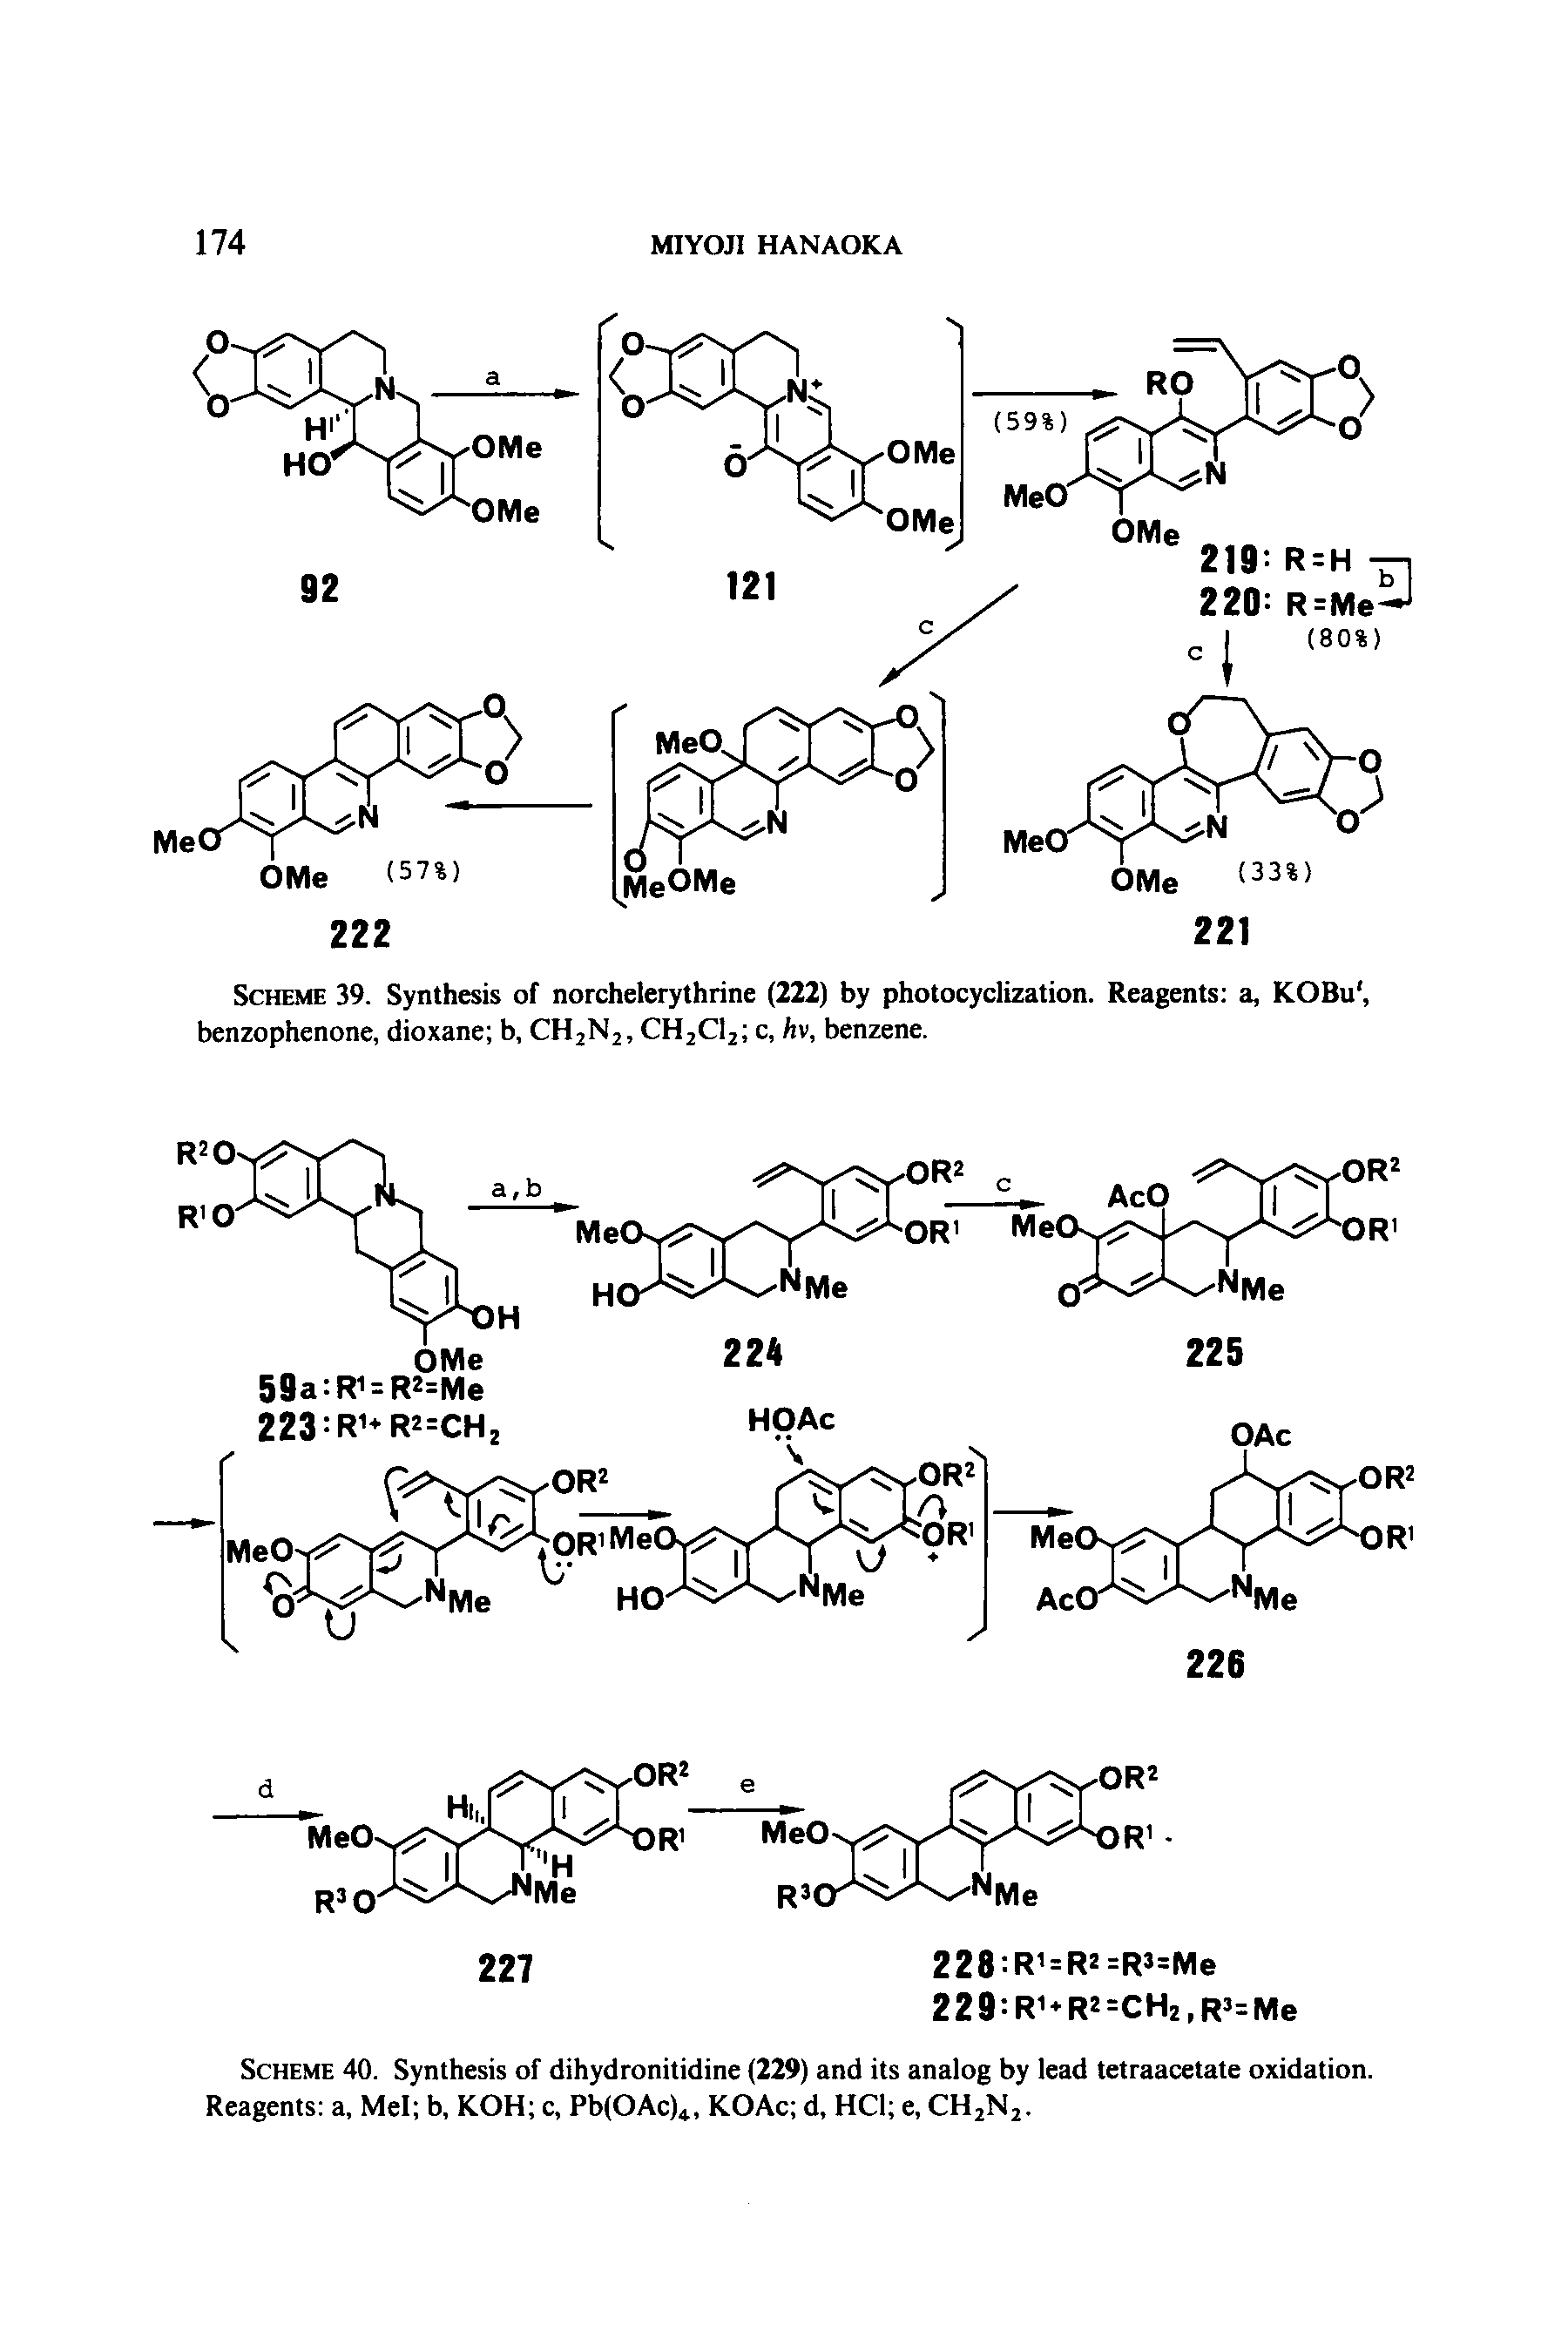 Scheme 39. Synthesis of norchelerythrine (222) by photocyclization. Reagents a, KOBu, benzophenone, dioxane b, CH2N2, CH2C12 c, hv, benzene.